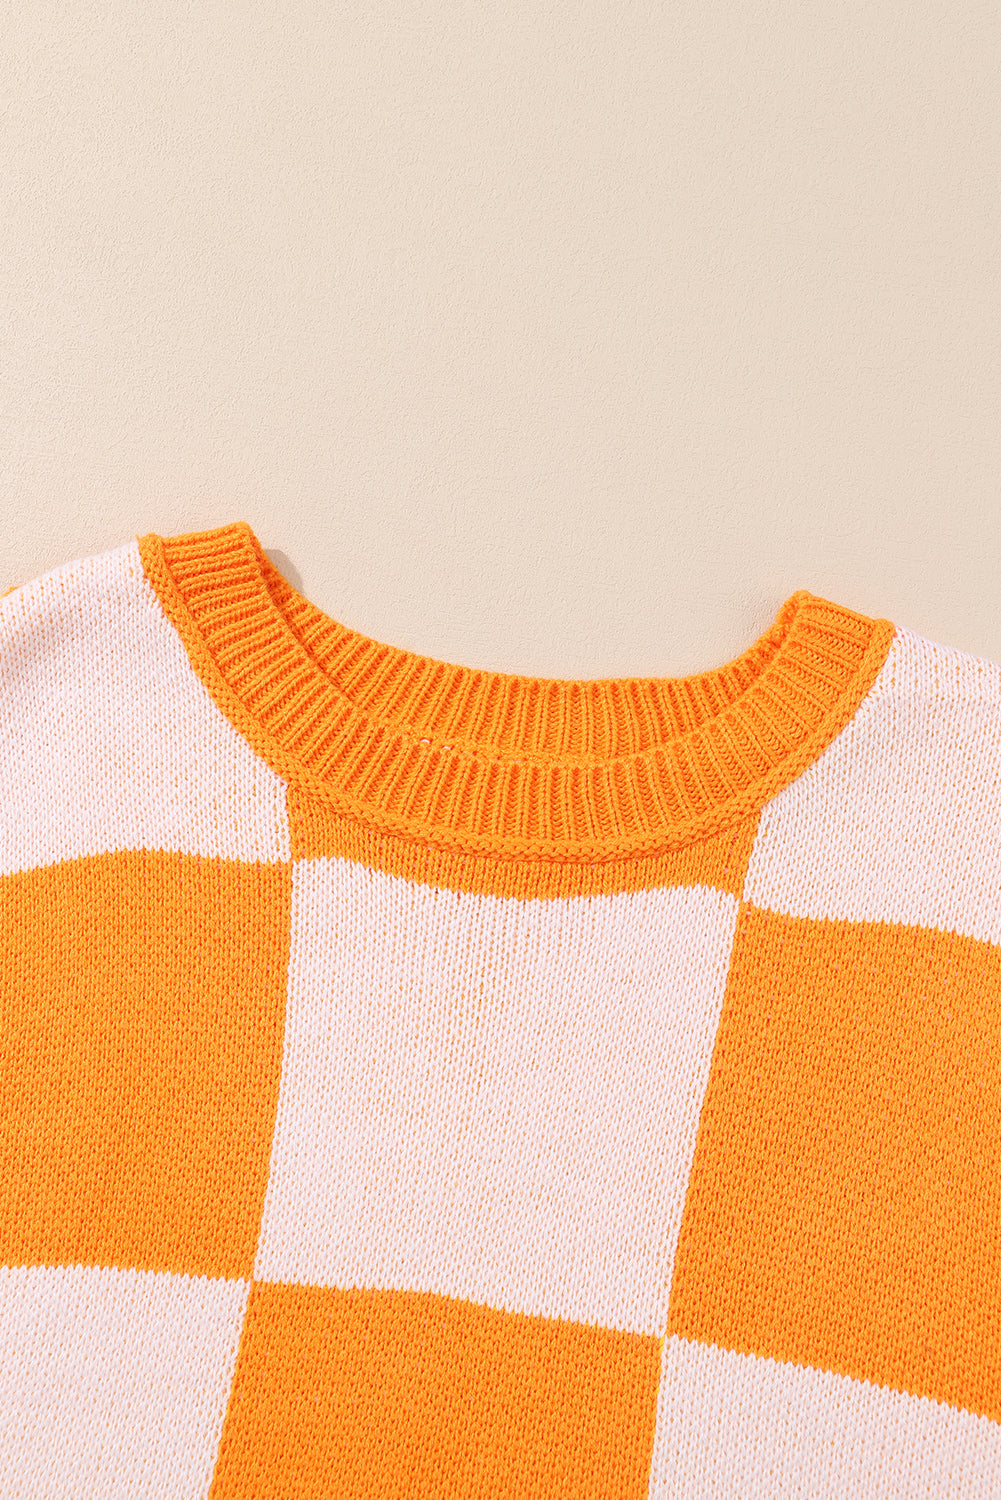 Orange Checkered Bishop Sleeve Sweater - Dixie Hike & Style